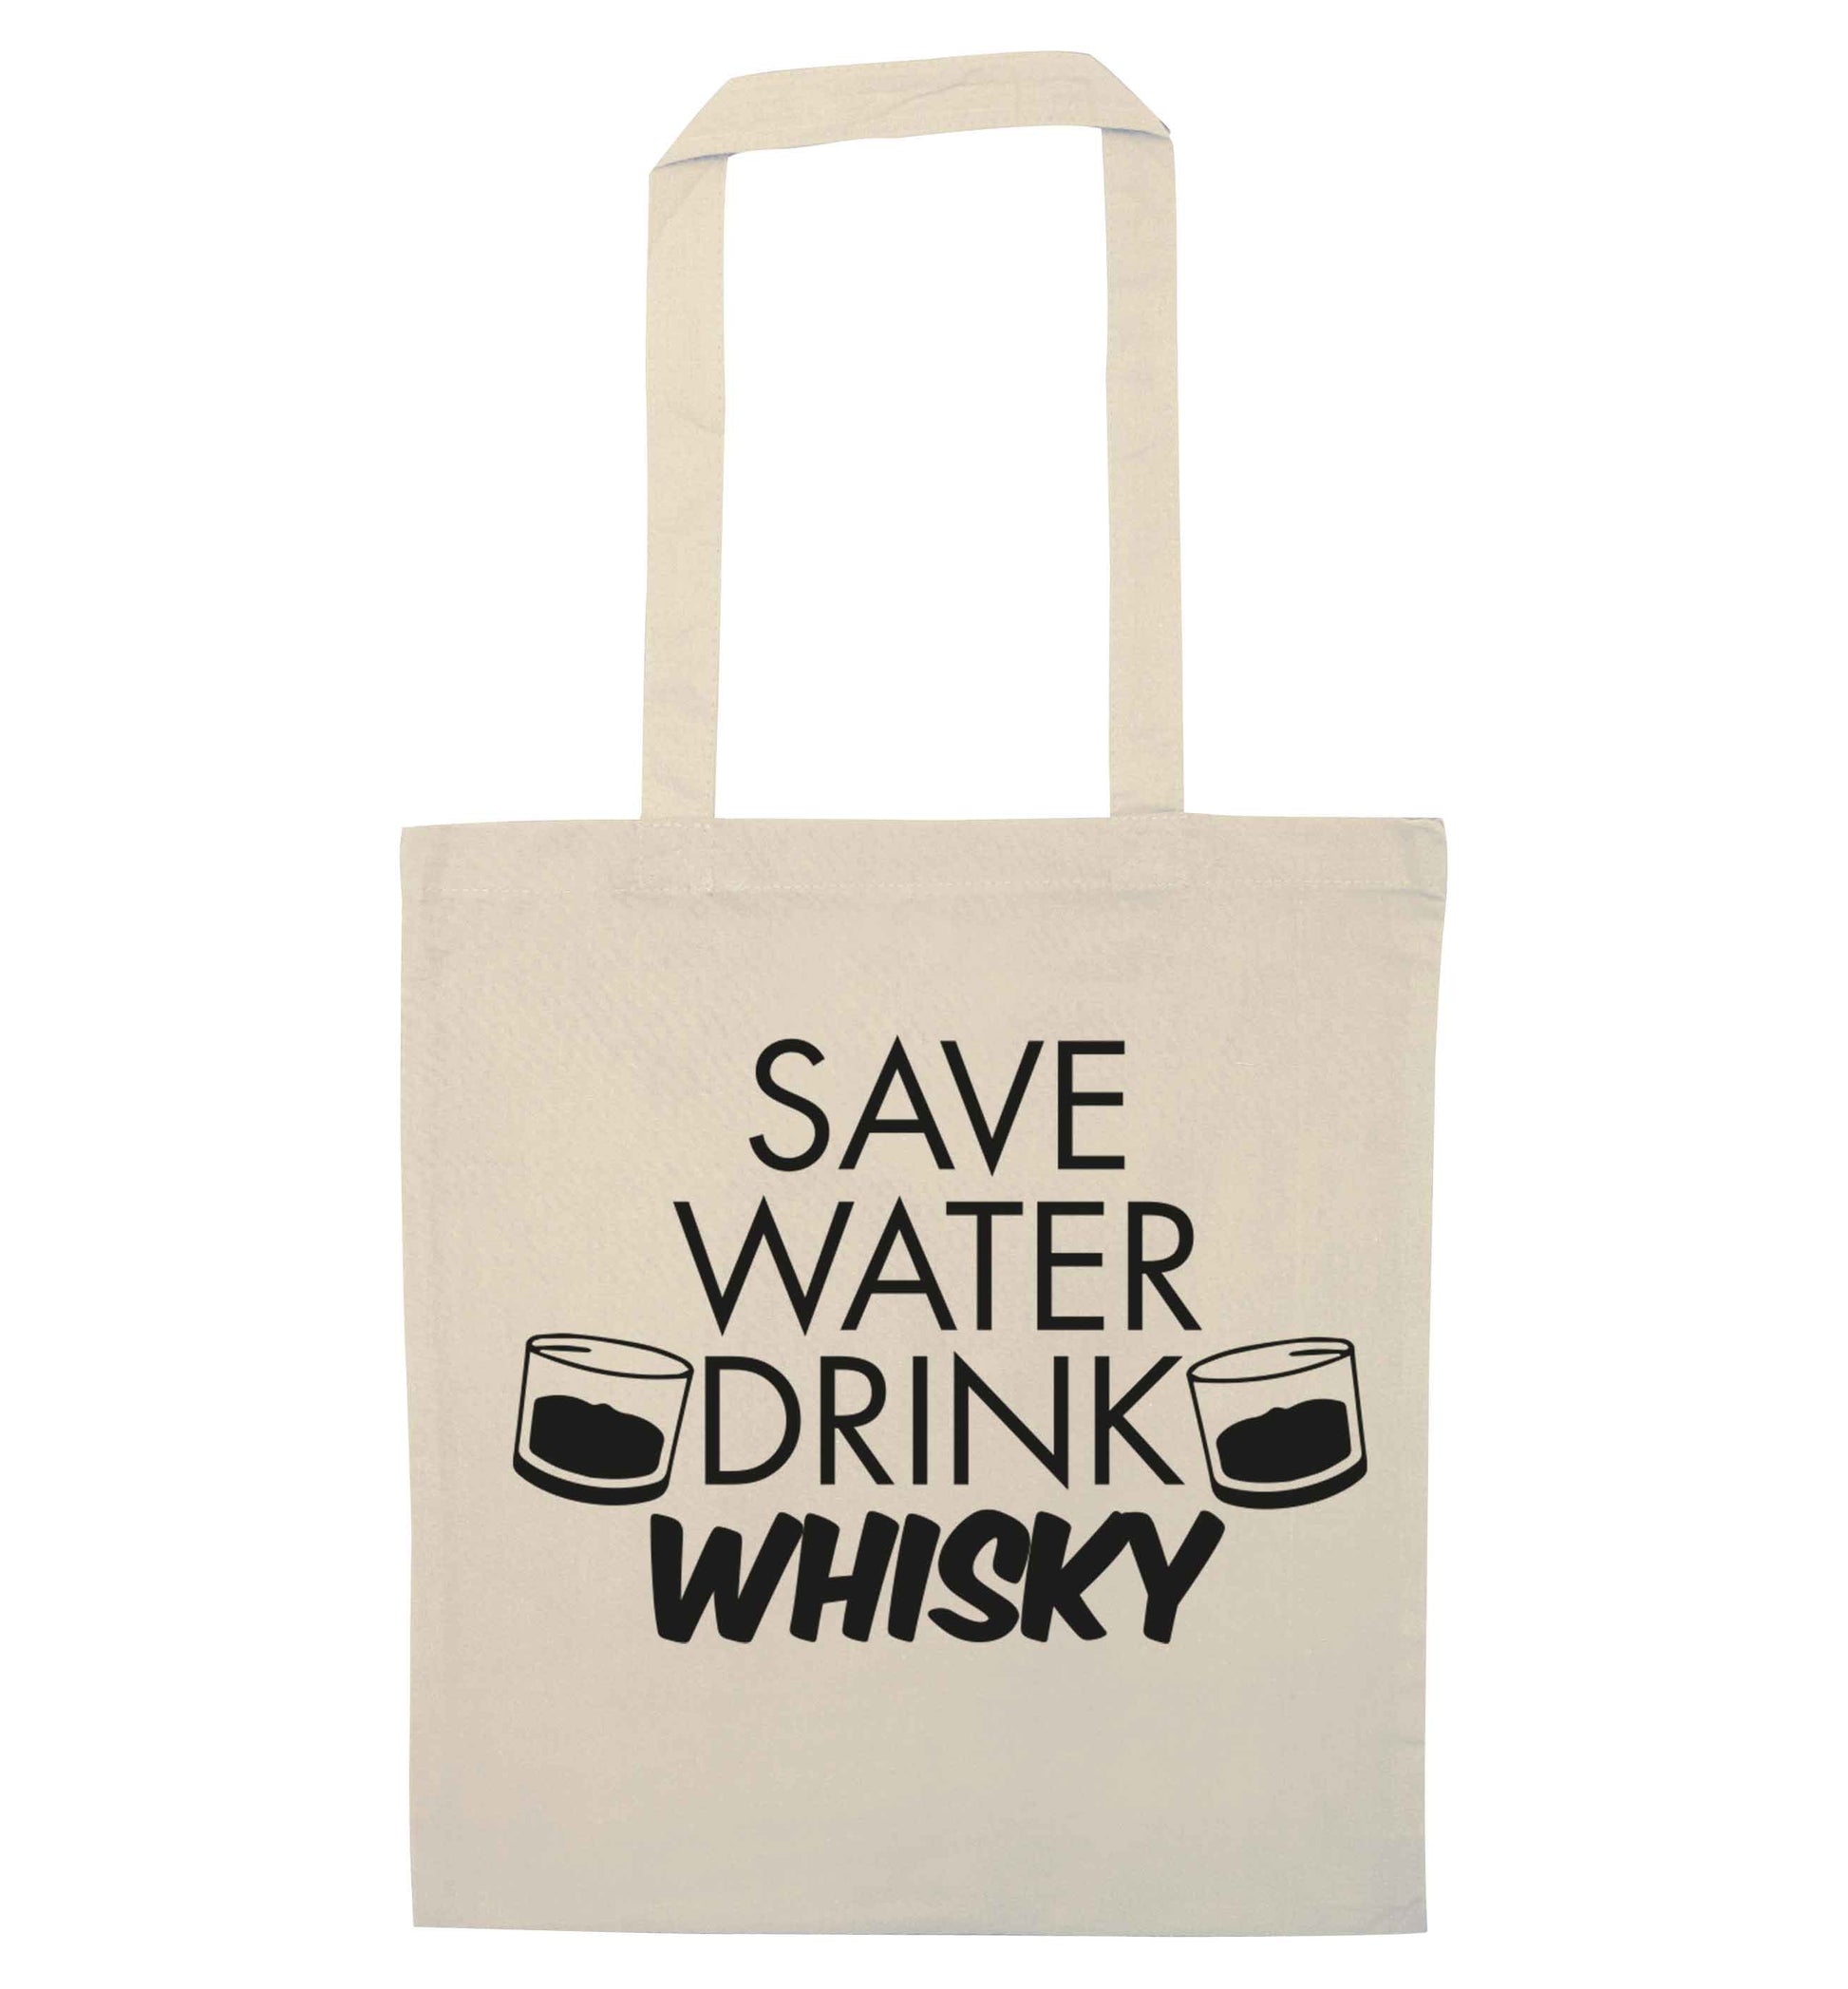 Save water drink whisky natural tote bag